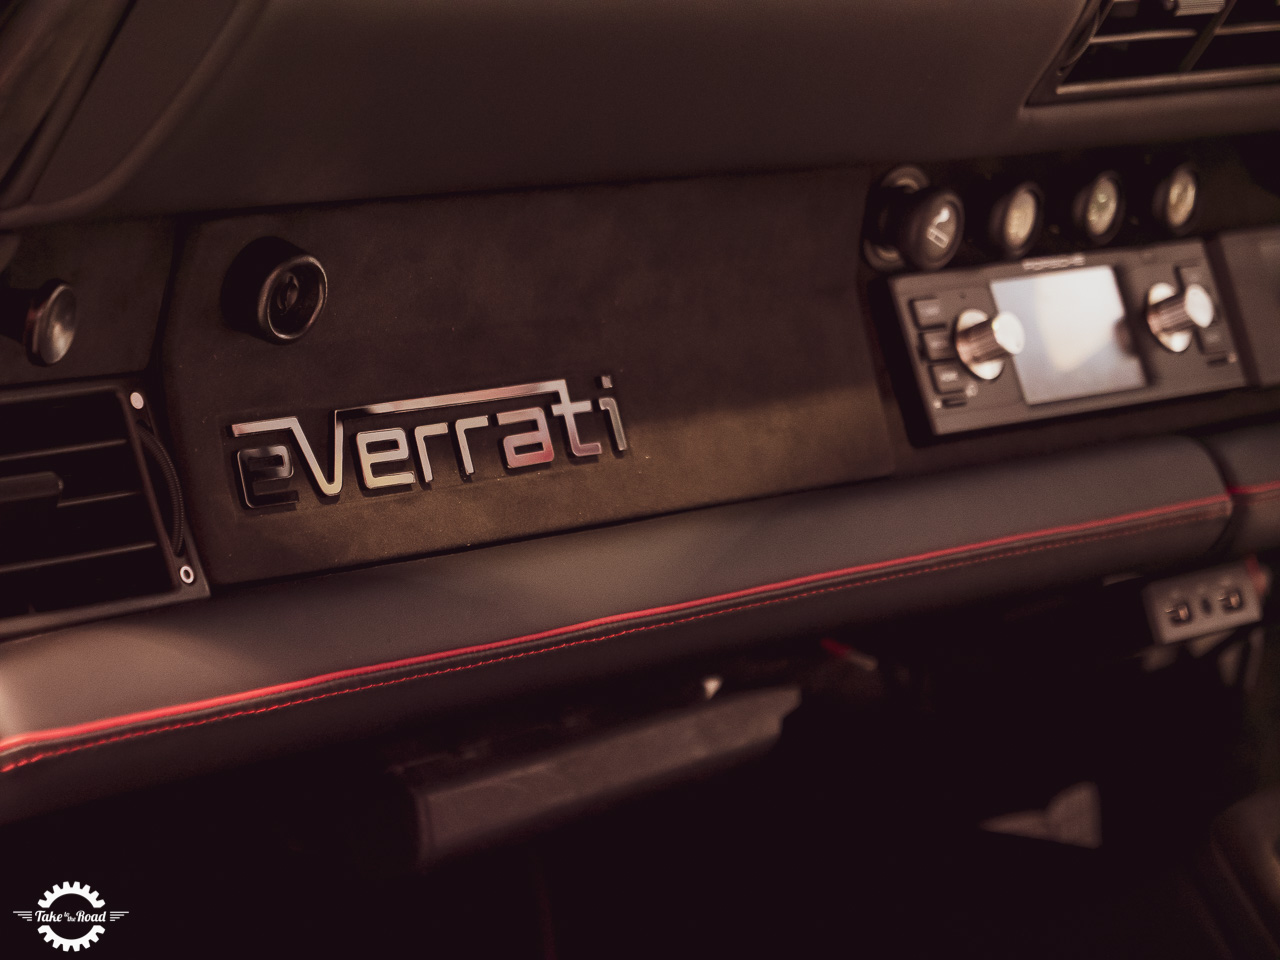 Everrati unveils new Porsche 911 EV at Joe Macari London